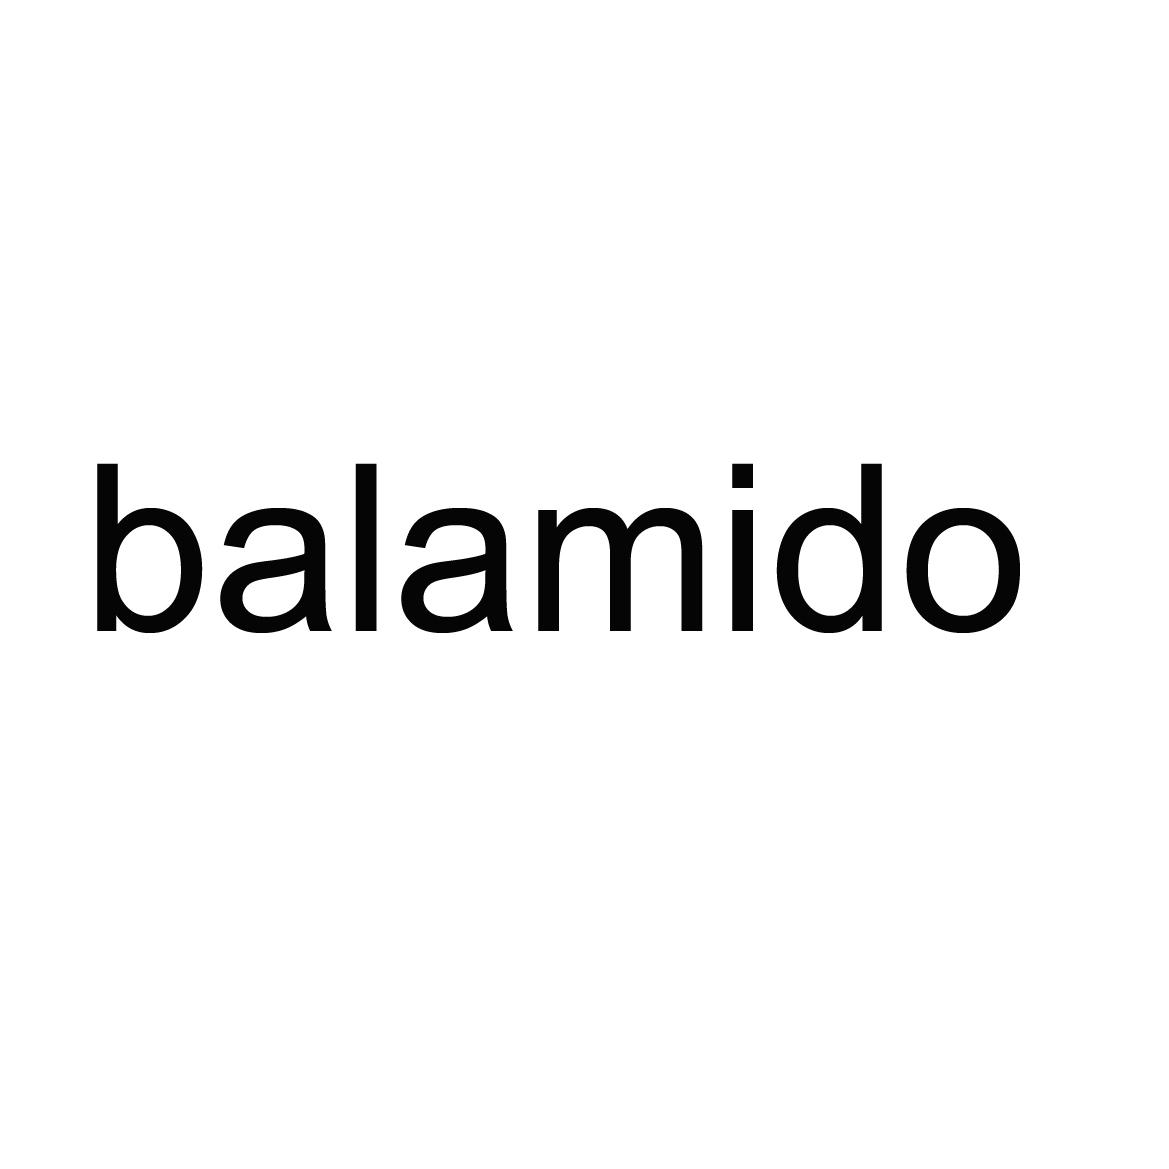 BALAMIDO